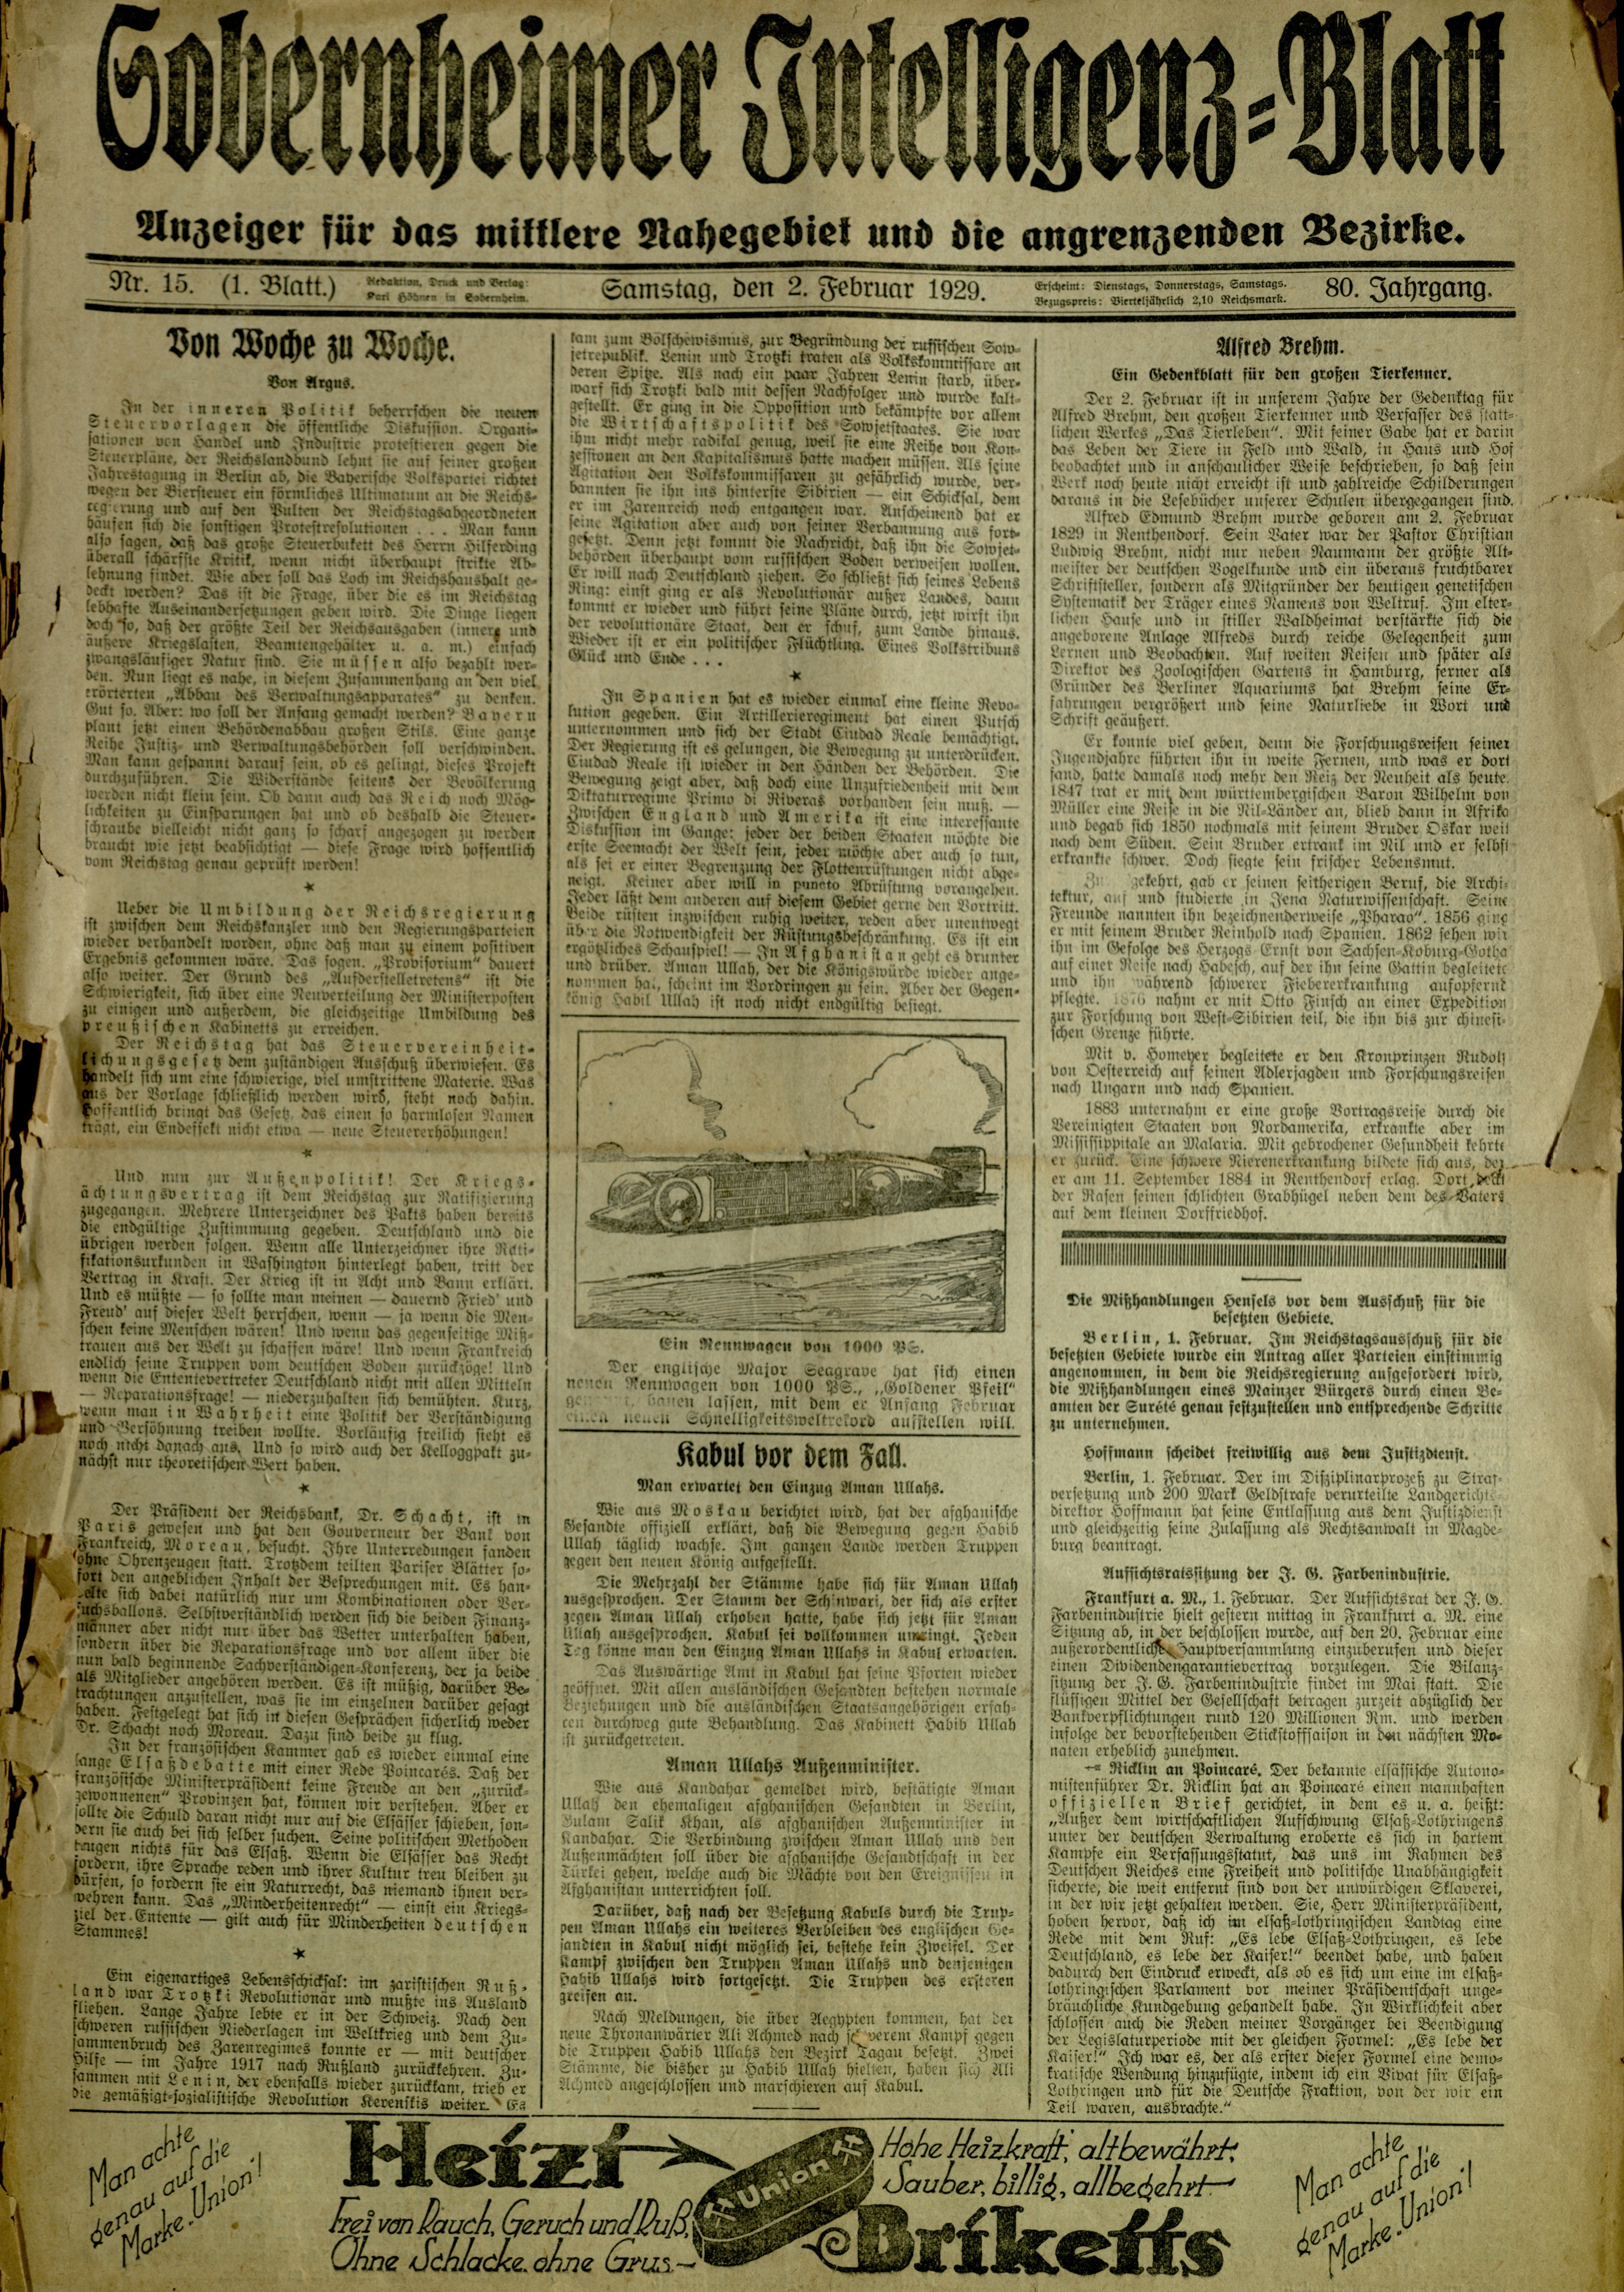 Zeitung: Sobernheimer Intelligenzblatt; Februar 1929, Jg. 80 Nr. 15 (Heimatmuseum Bad Sobernheim CC BY-NC-SA)